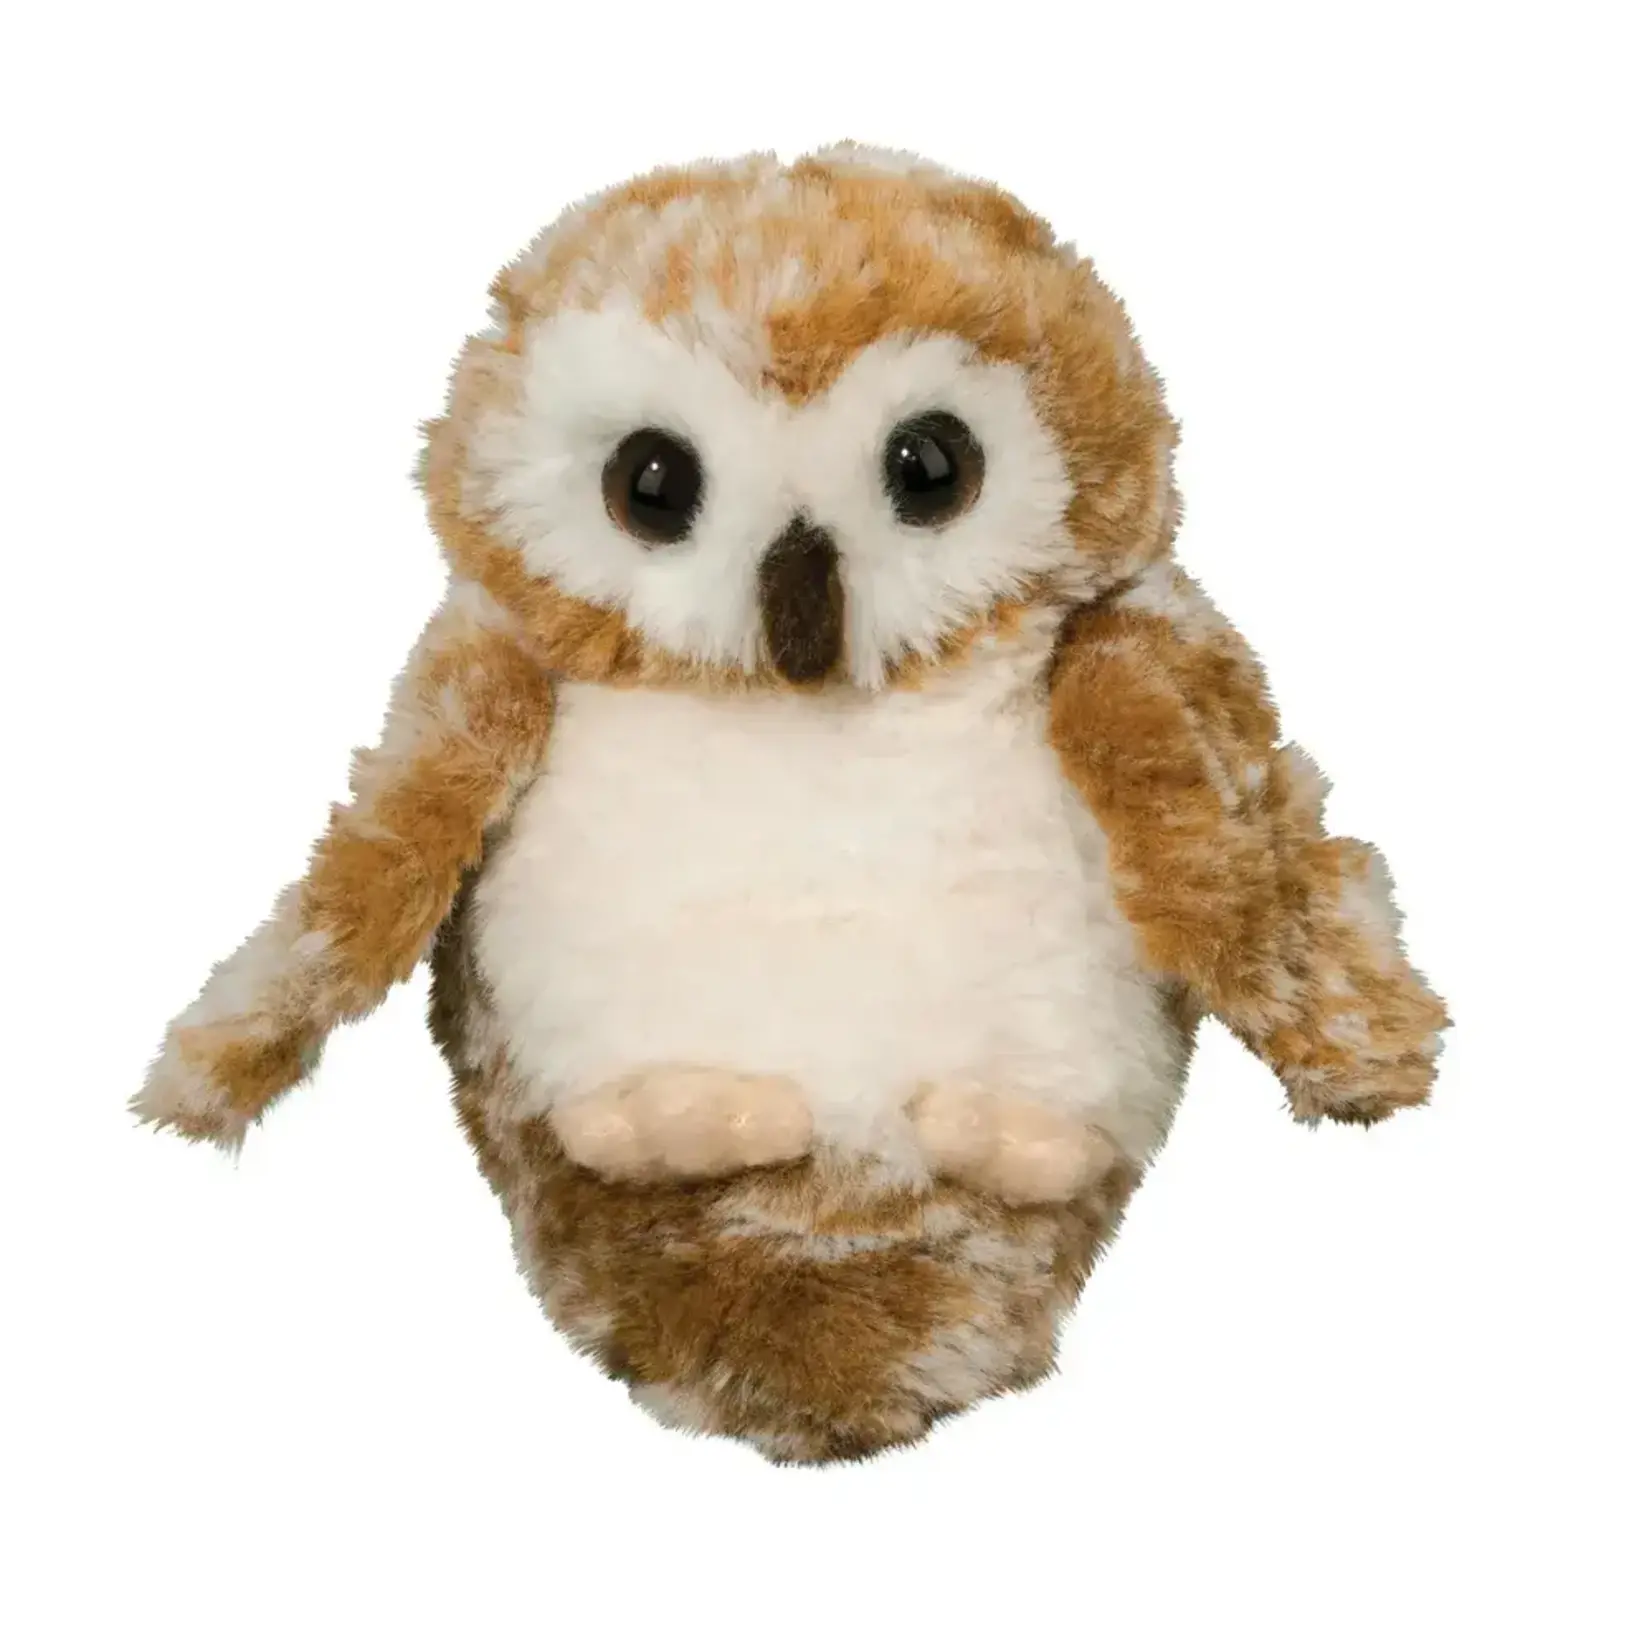 Douglas Toys Lil’ Baby Owl